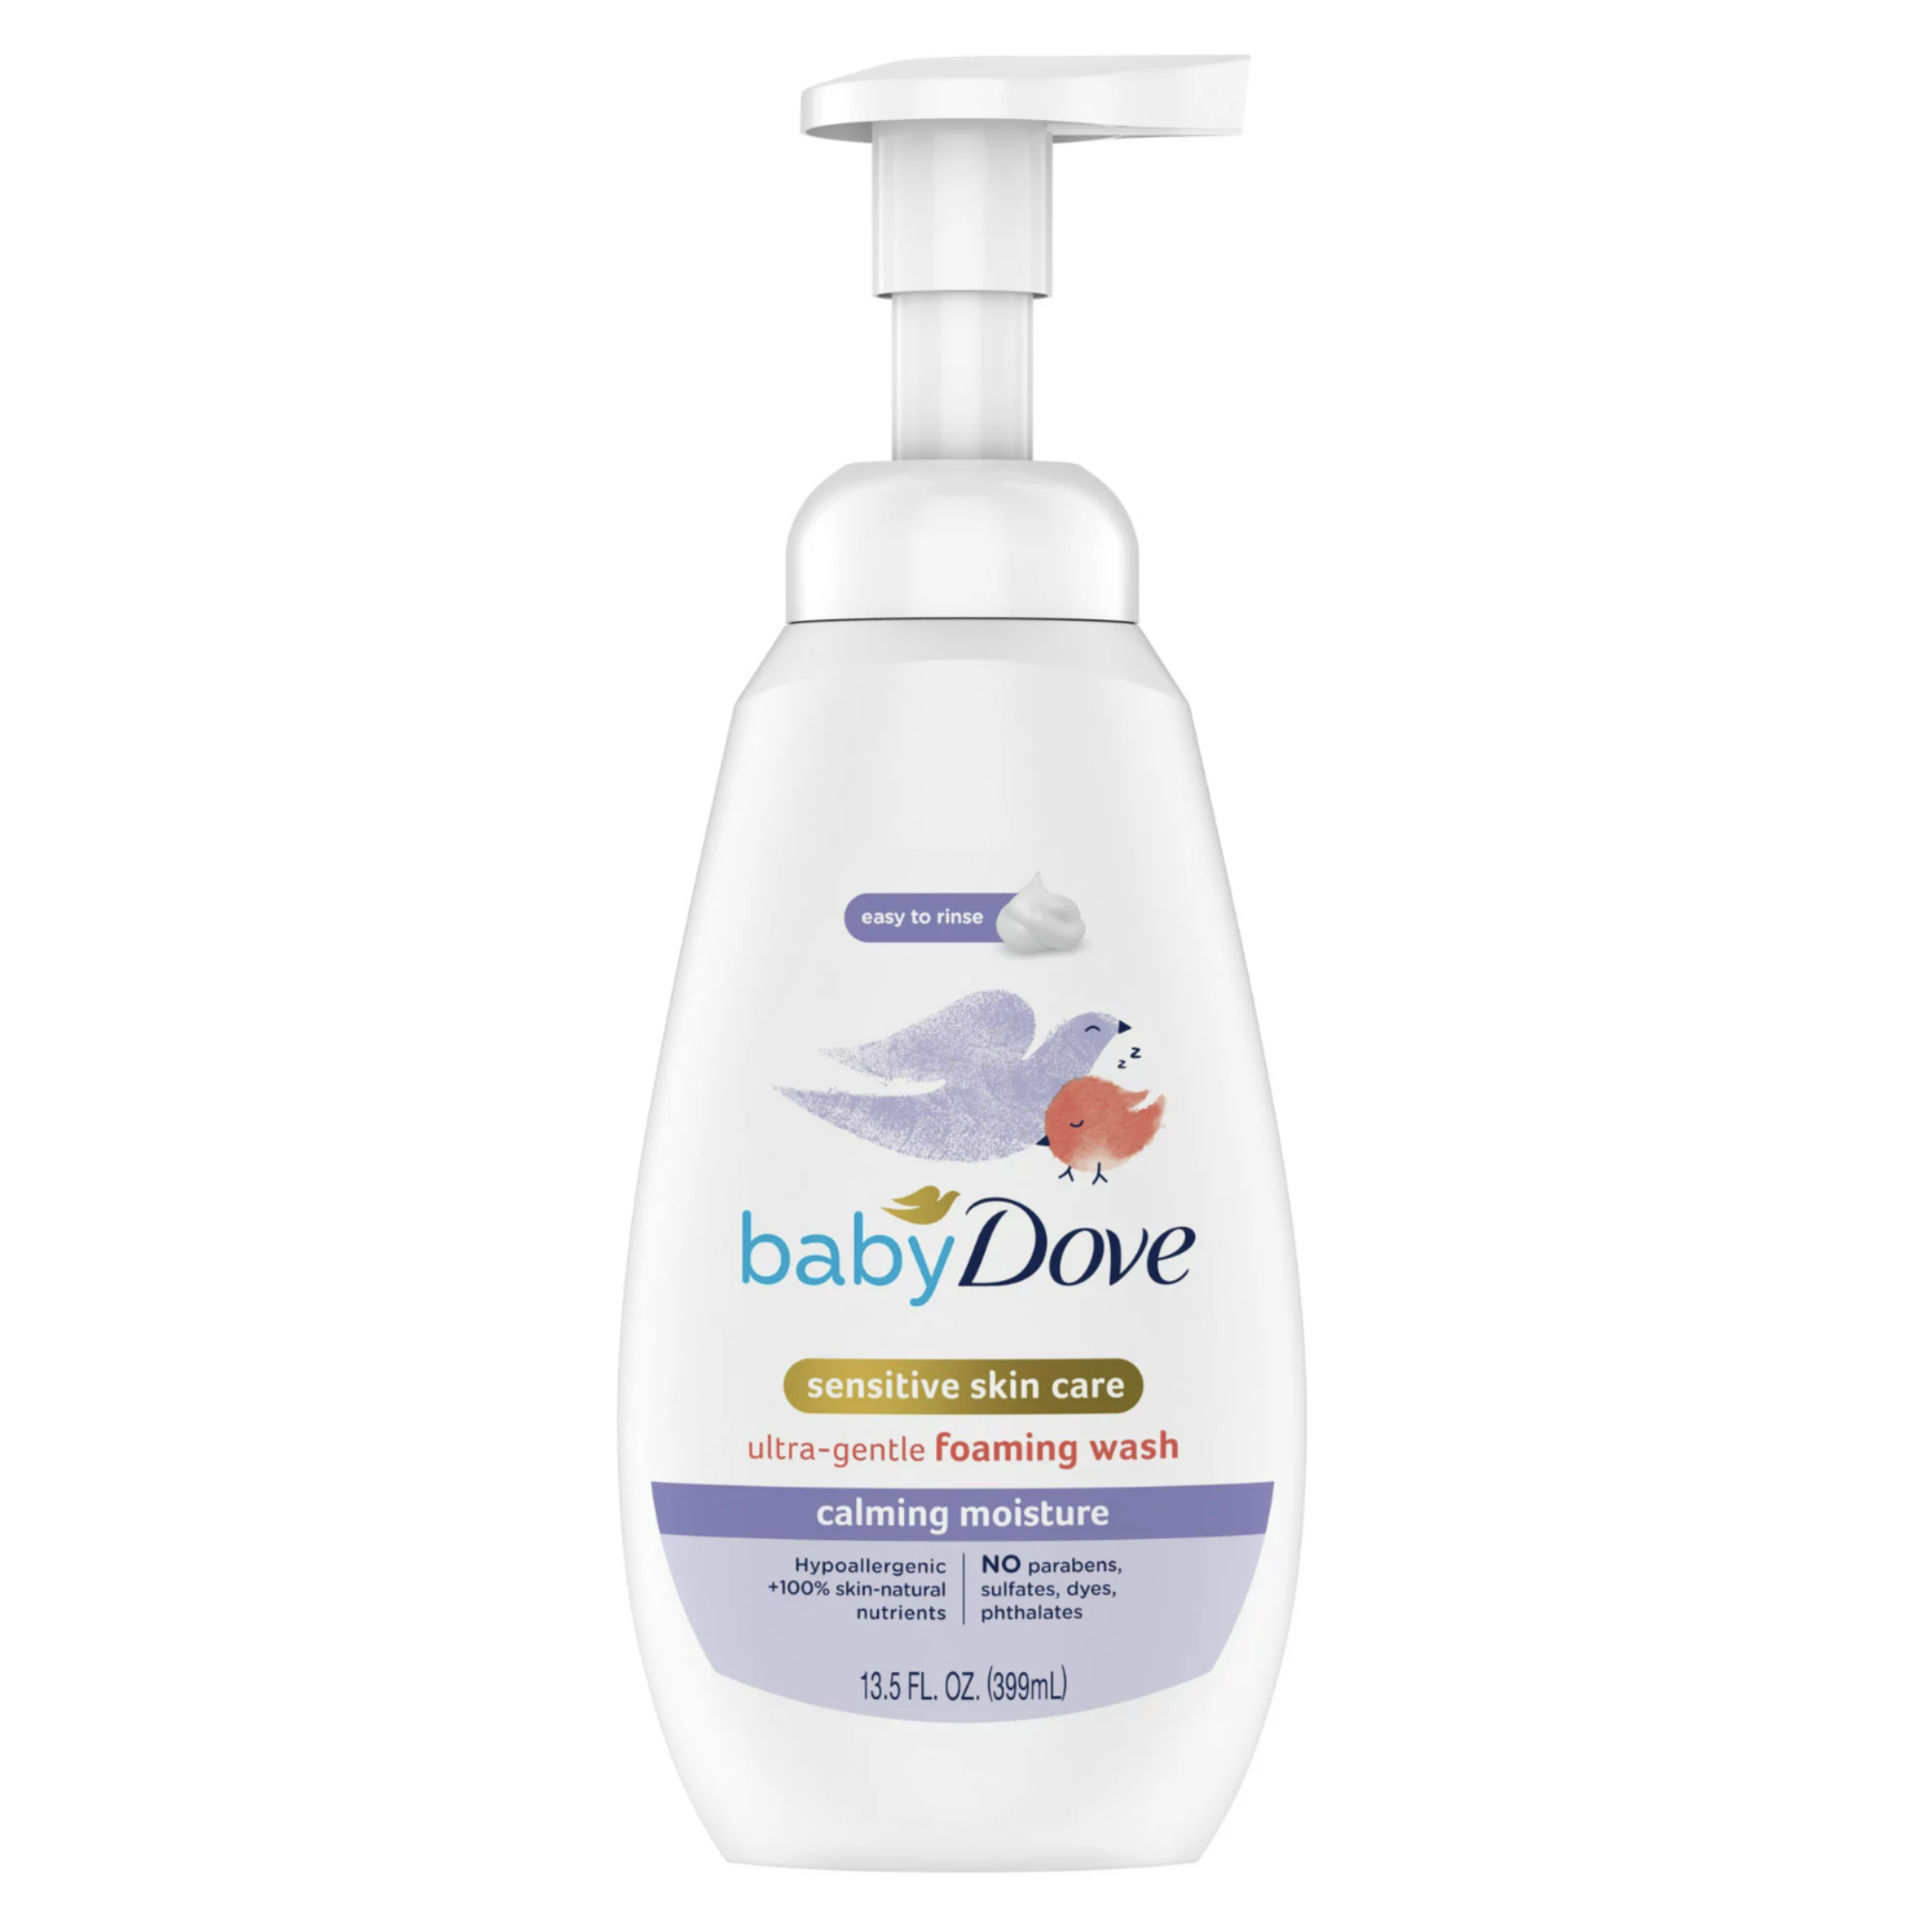 Baby dove sensitive skin care ultra gentle foaming wash calming moisture